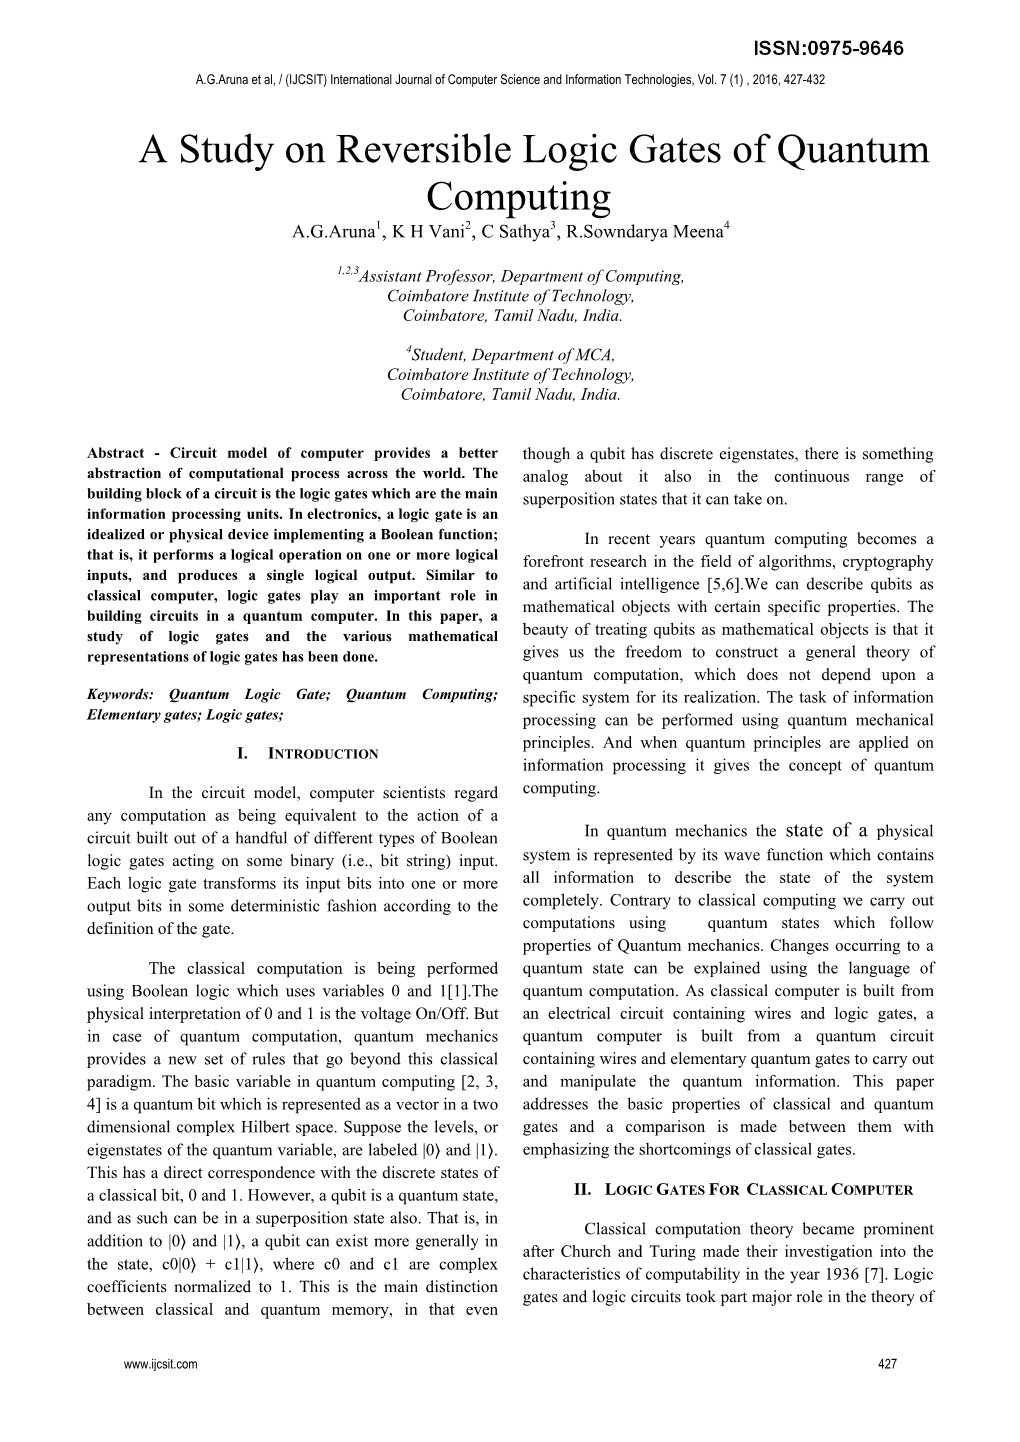 A Study on Reversible Logic Gates of Quantum Computing A.G.Aruna1, K H Vani2, C Sathya3, R.Sowndarya Meena4